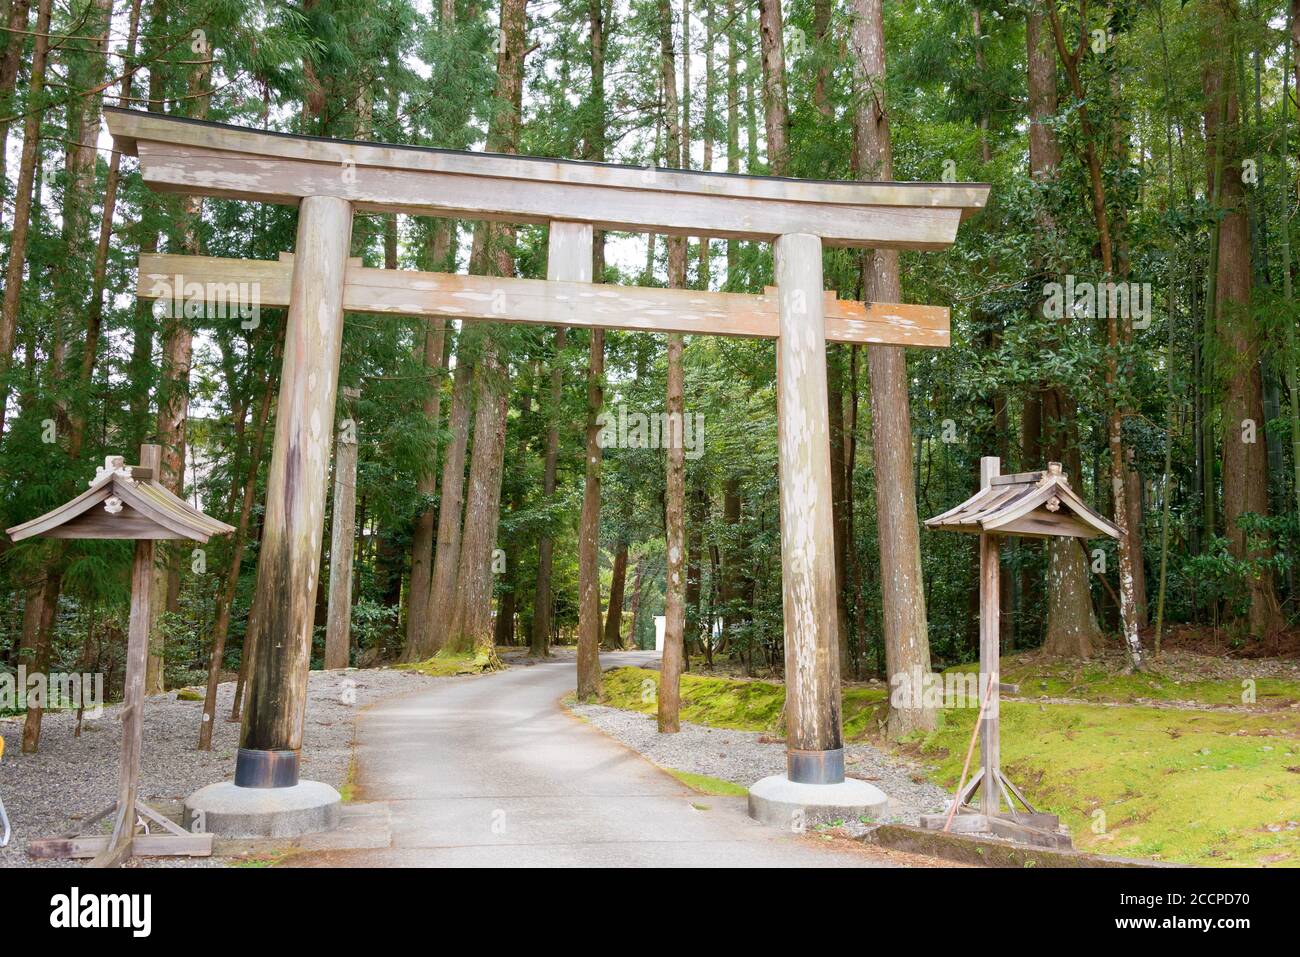 Wakayama, Japan - Kumano Hongu Taisha in Tanabe, Wakayama, Japan. Es ist Teil des UNESCO-Weltkulturerbes. Stockfoto